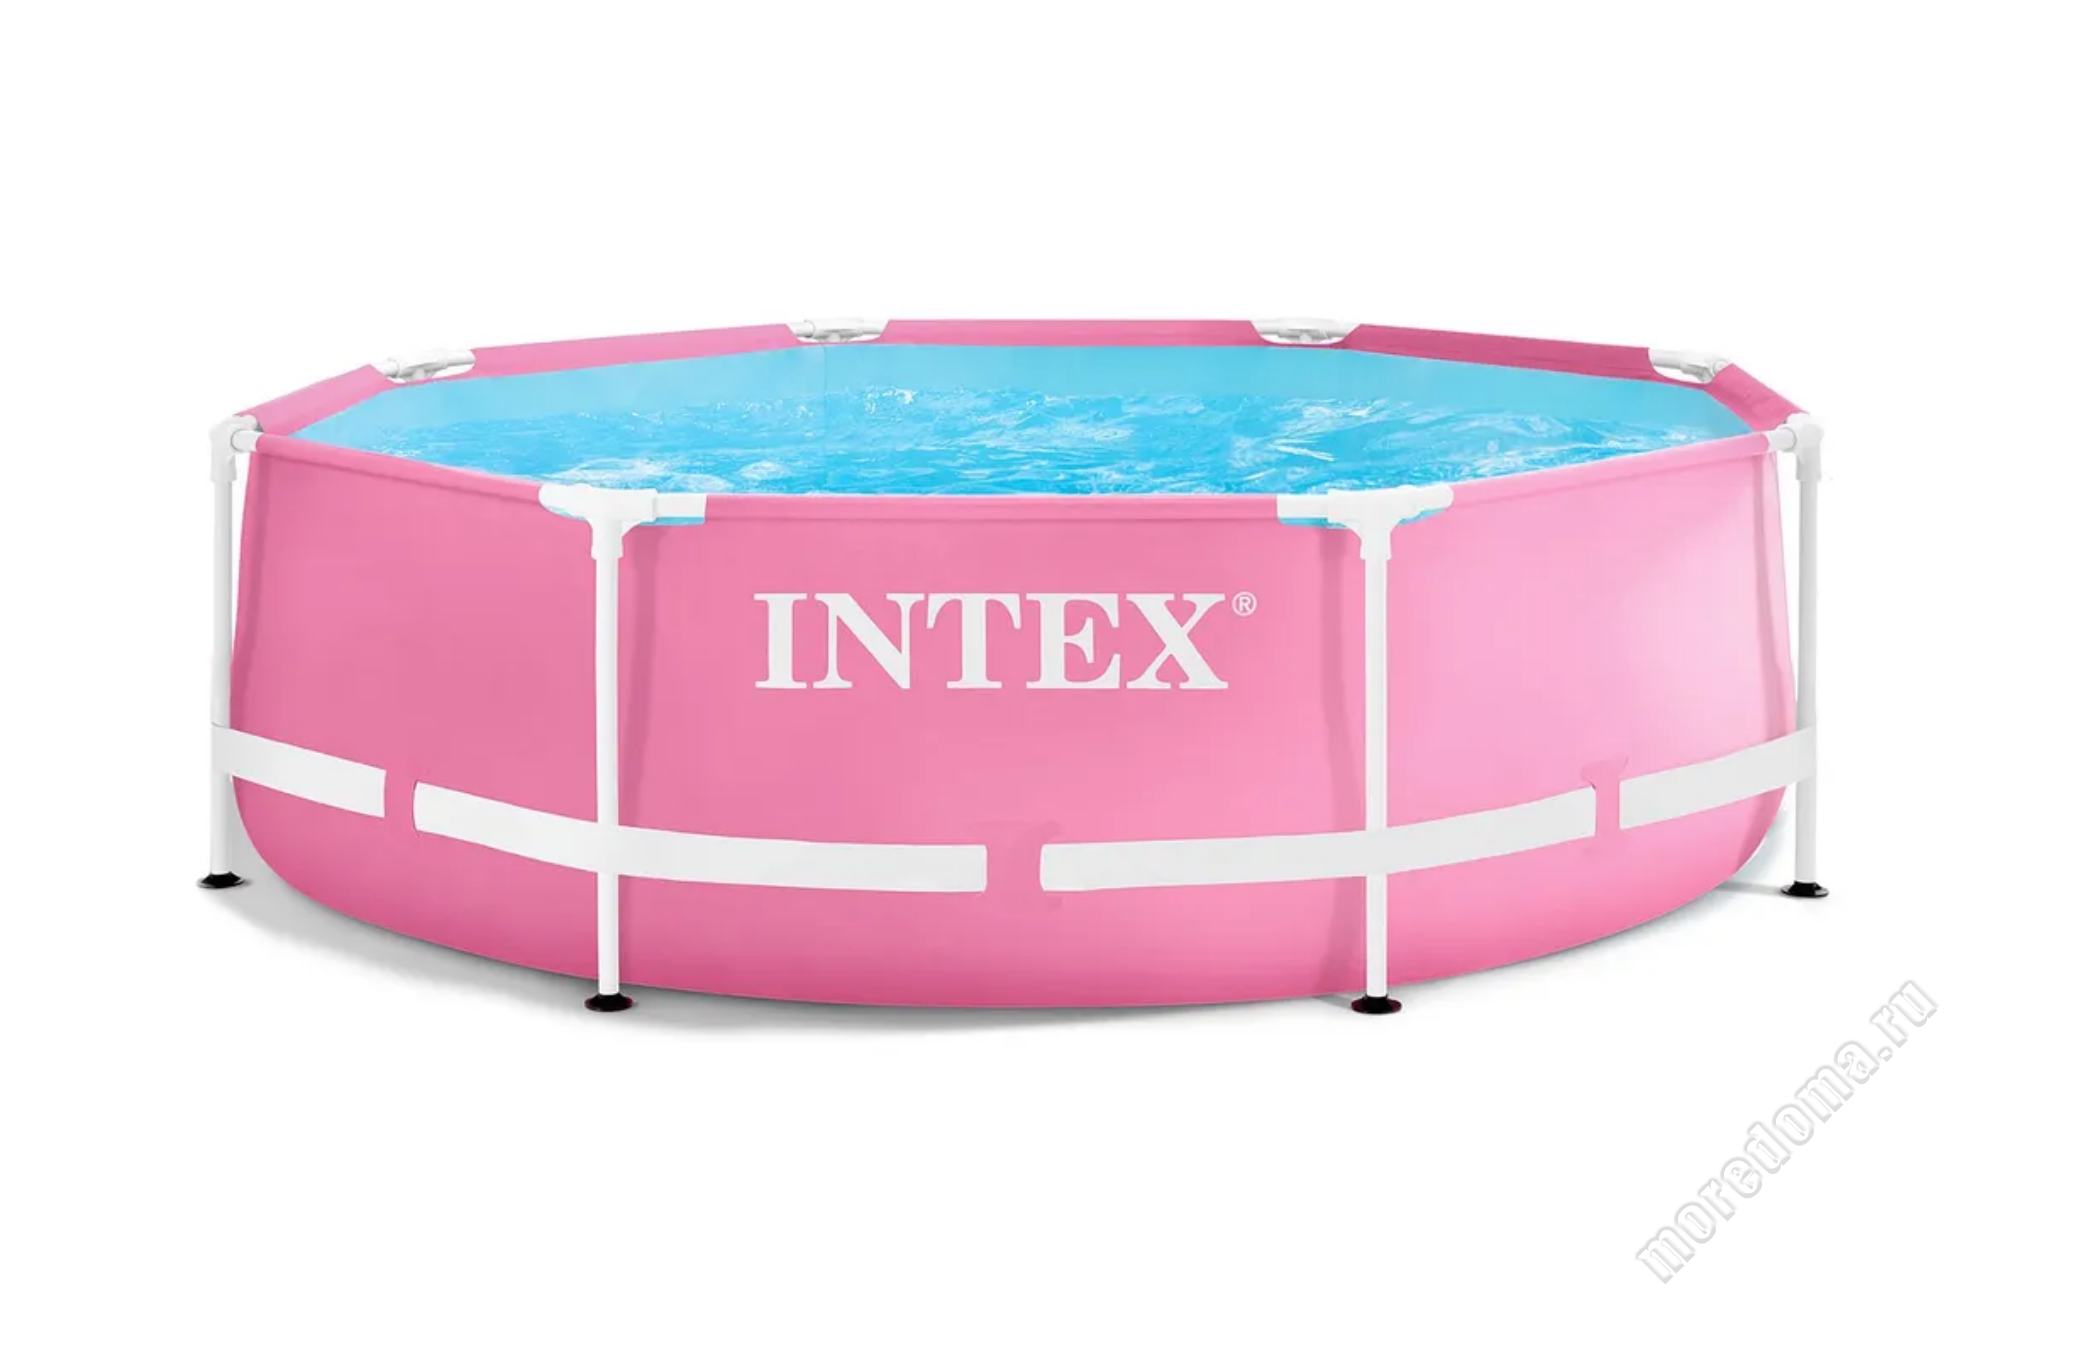 28290 Каркасный бассейн INTEX Pink Metal Frame (круг) 2.44 х 0.76 м ; артикул 28290 диаметр 2.44 высота 0.76  